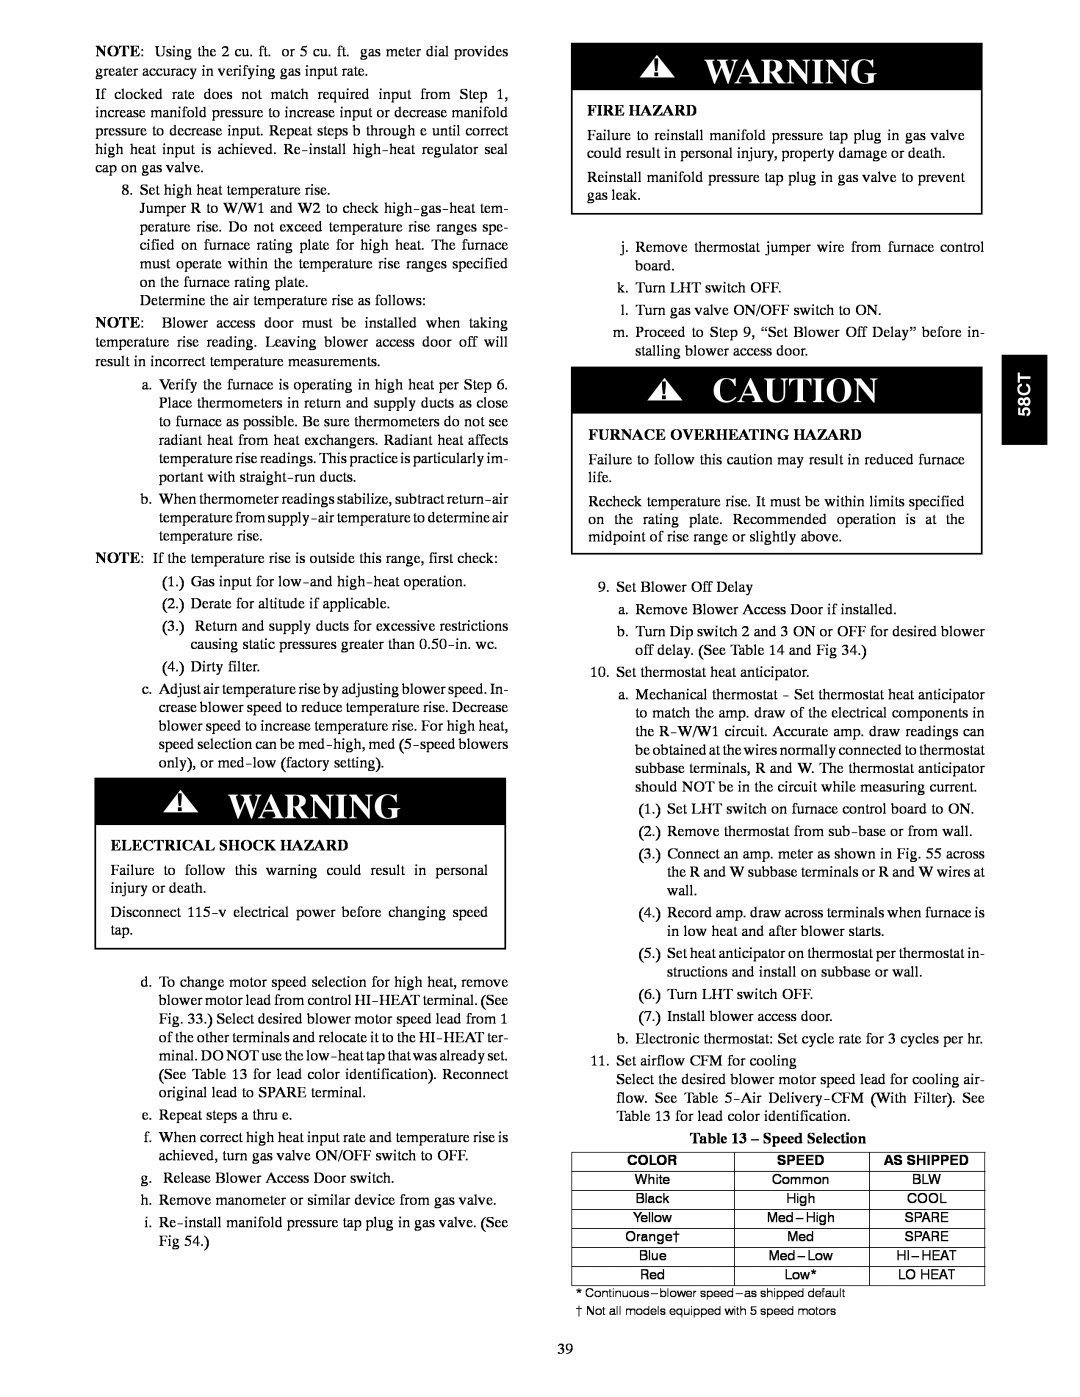 Carrier 58CTA/CTX instruction manual Speed Selection, Electrical Shock Hazard, Fire Hazard, Furnace Overheating Hazard 